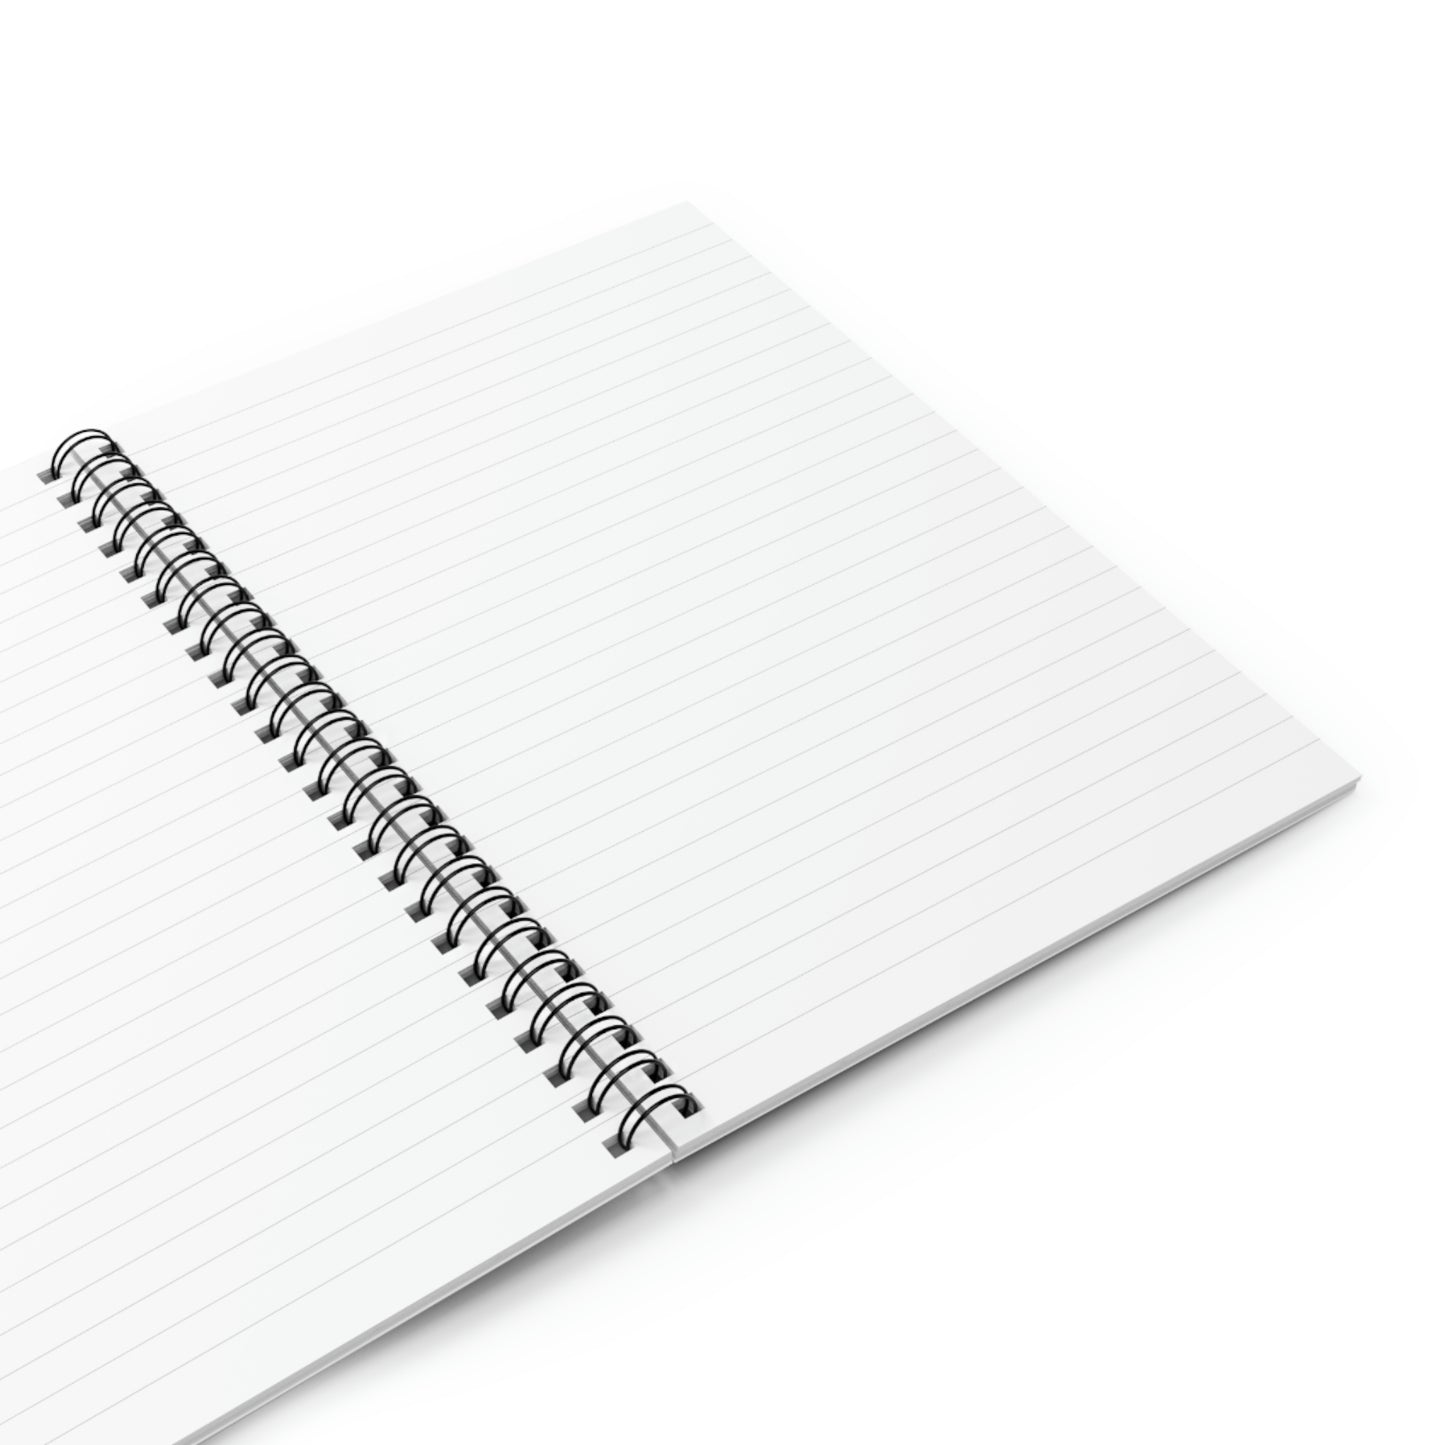 Kappa Epsilon Psi (ΚΕΨ) (Purple) Spiral Notebook - Ruled Line